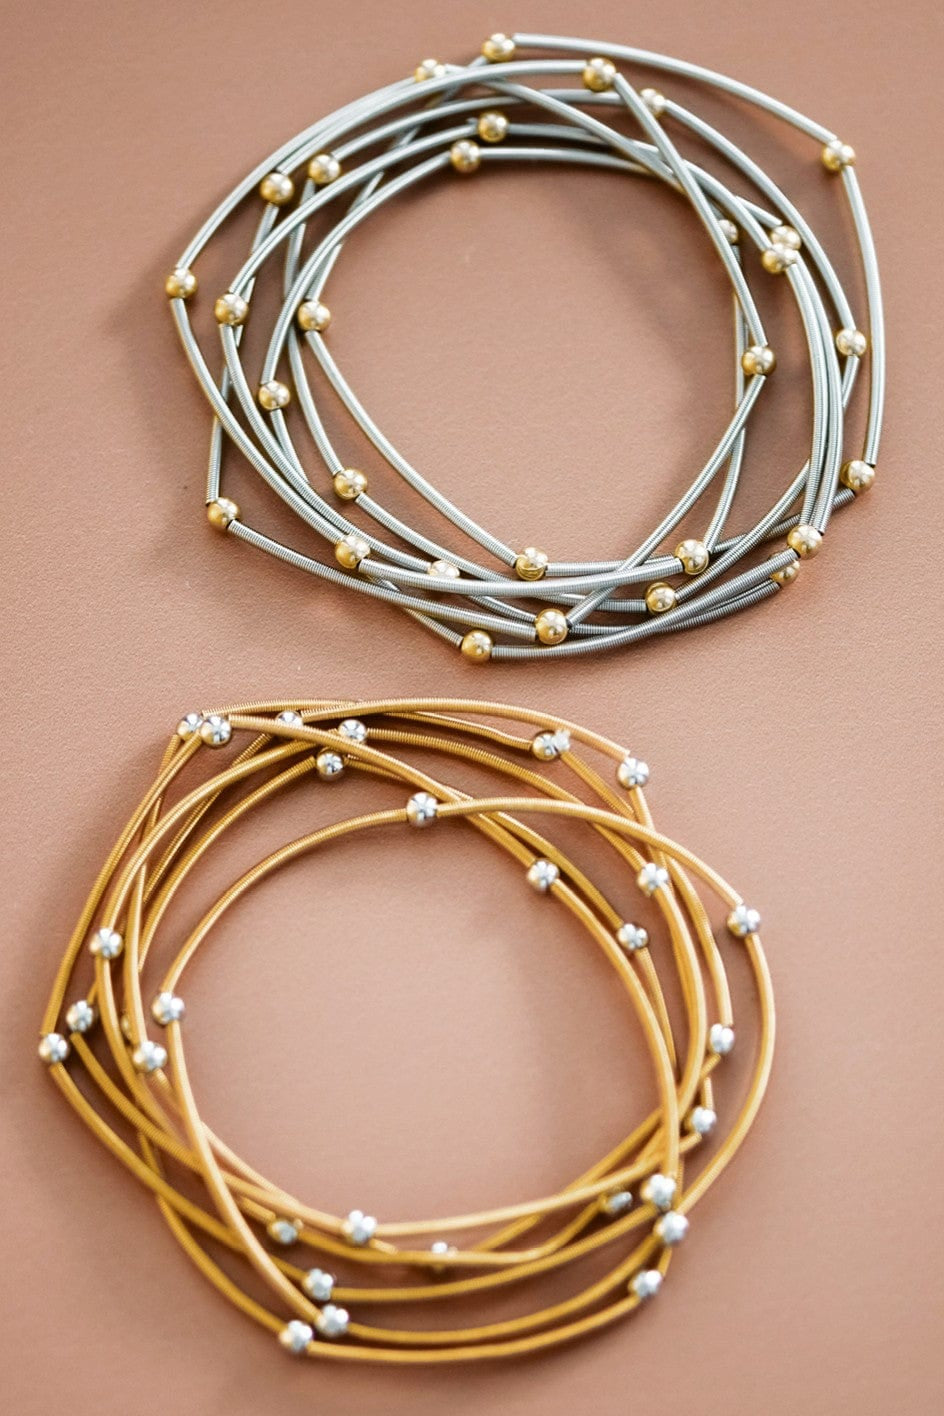 MIA ACCESSORIES Jewelry - Bracelets Stretchy Beaded Guitar String Bracelet Sets In Multi